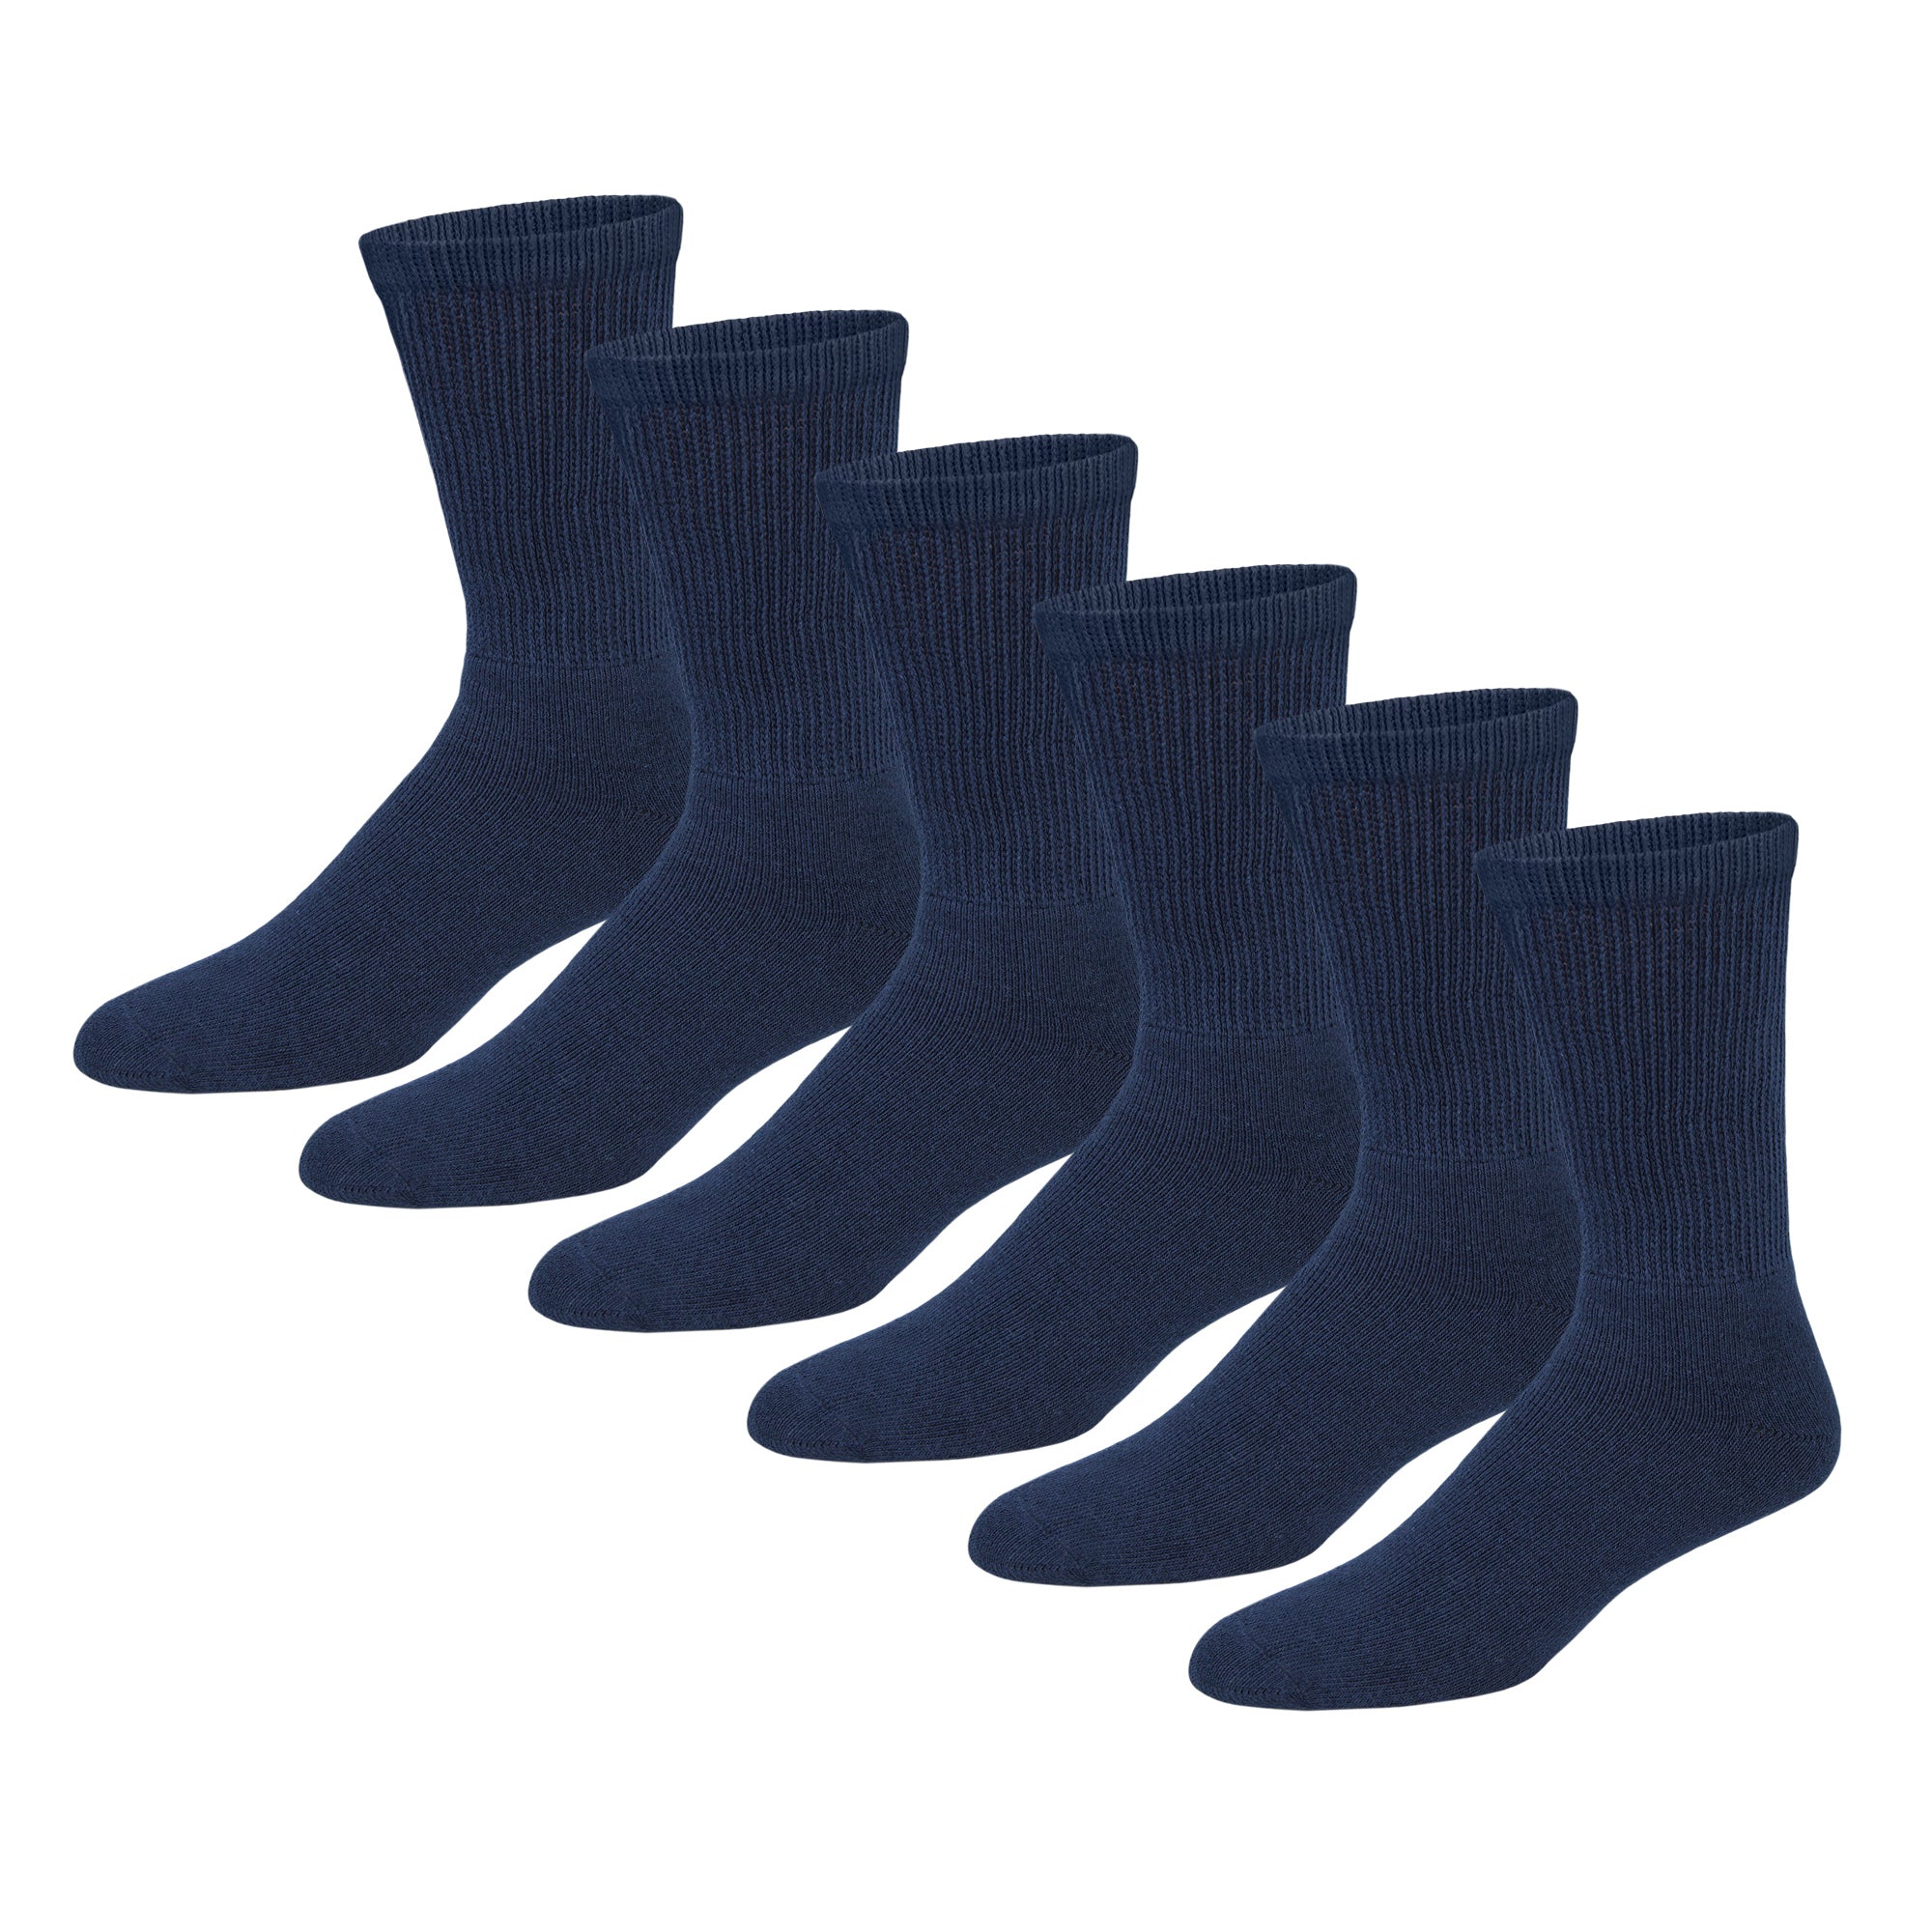 All Day Socks: Buy No Elastic, Soft Top, Comfy & Diabetic Socks